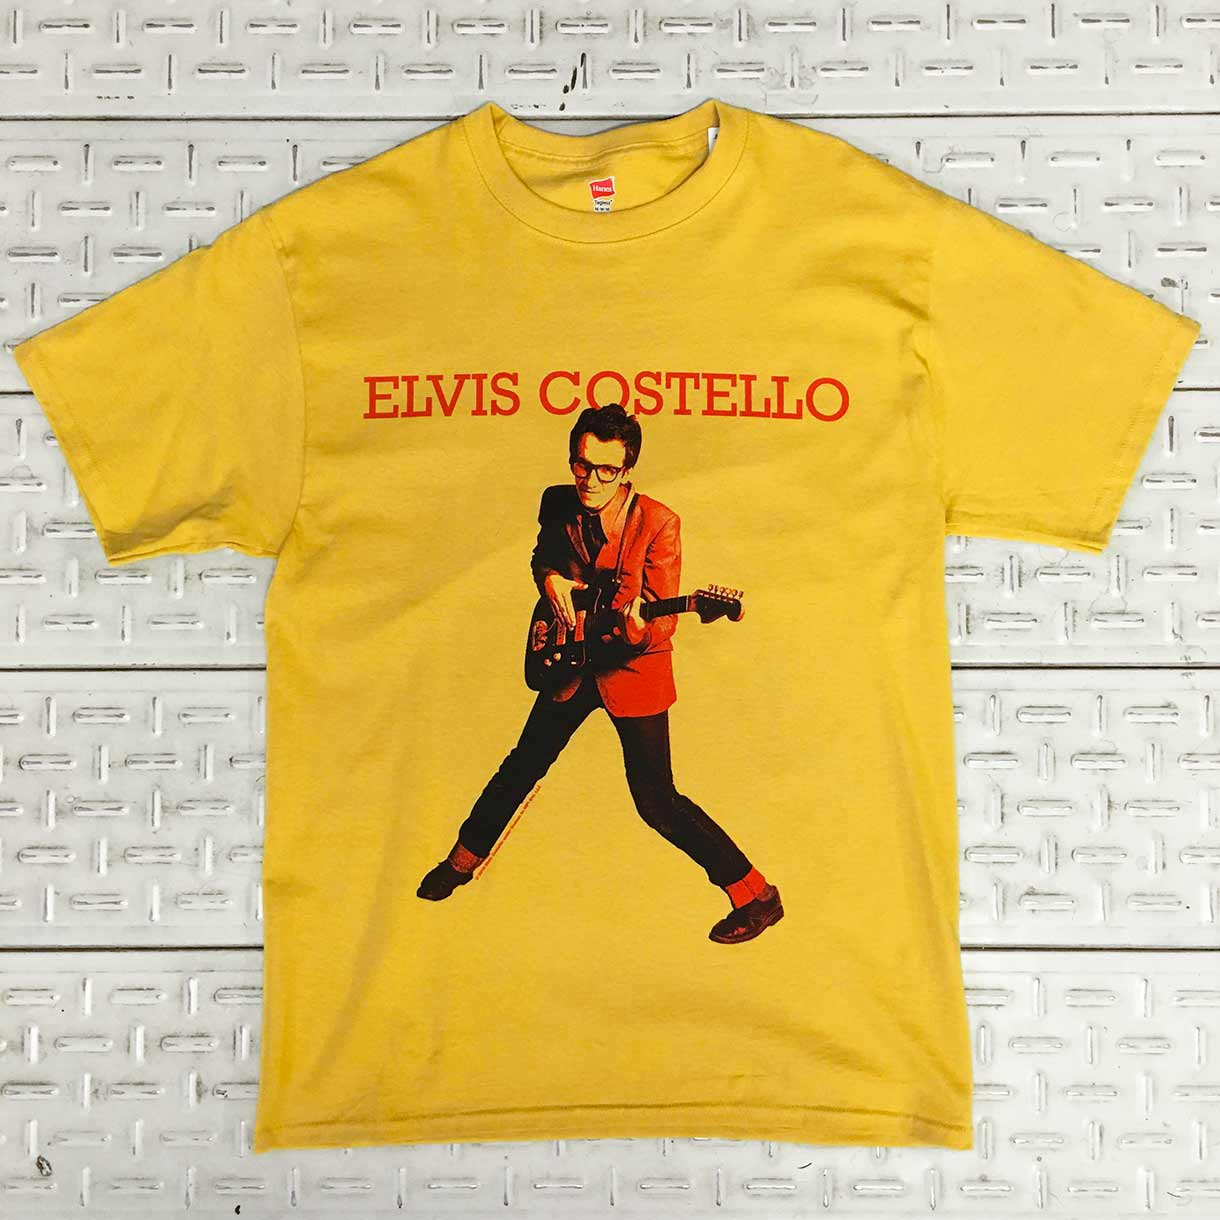 ELVIS COSTELLO t-shirt